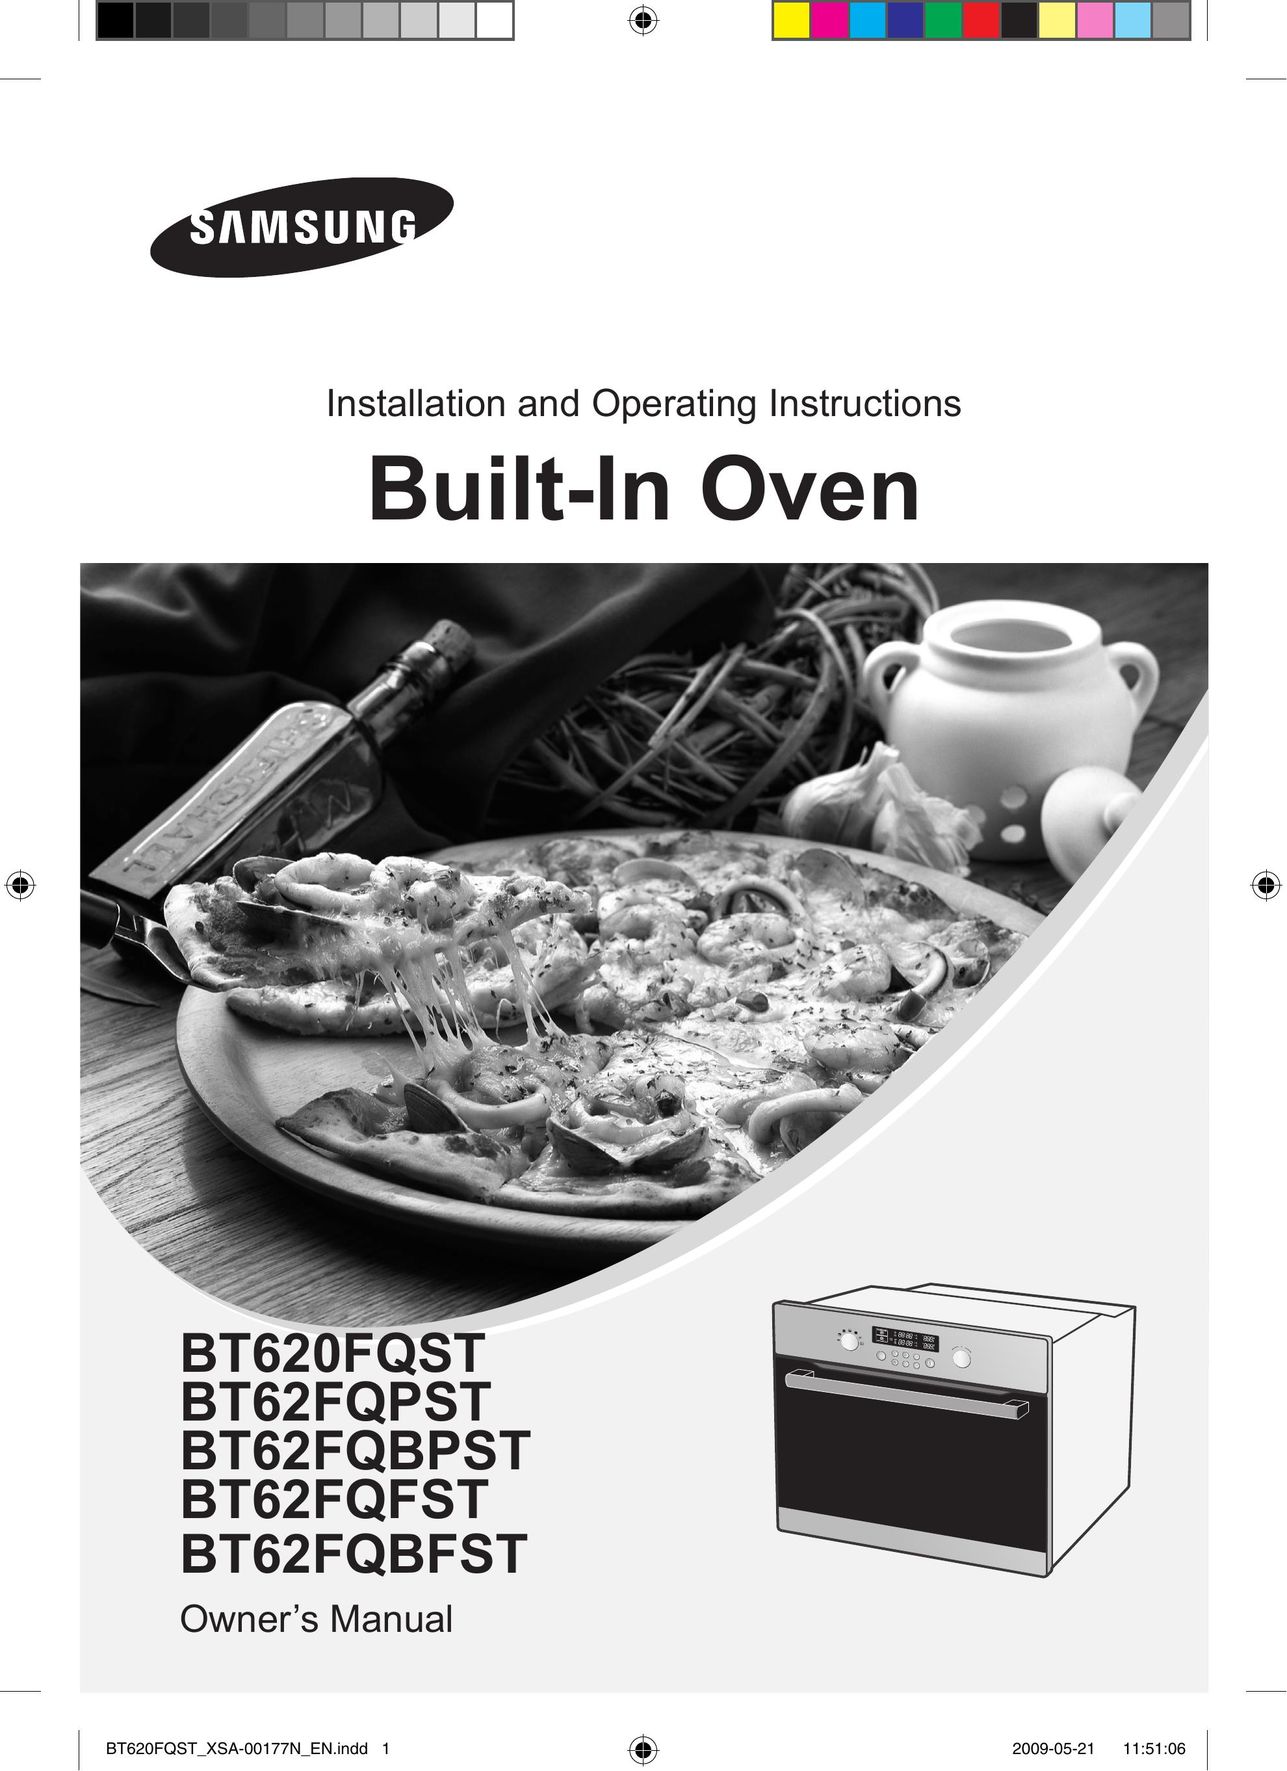 Samsung BT62FQBFST Oven User Manual